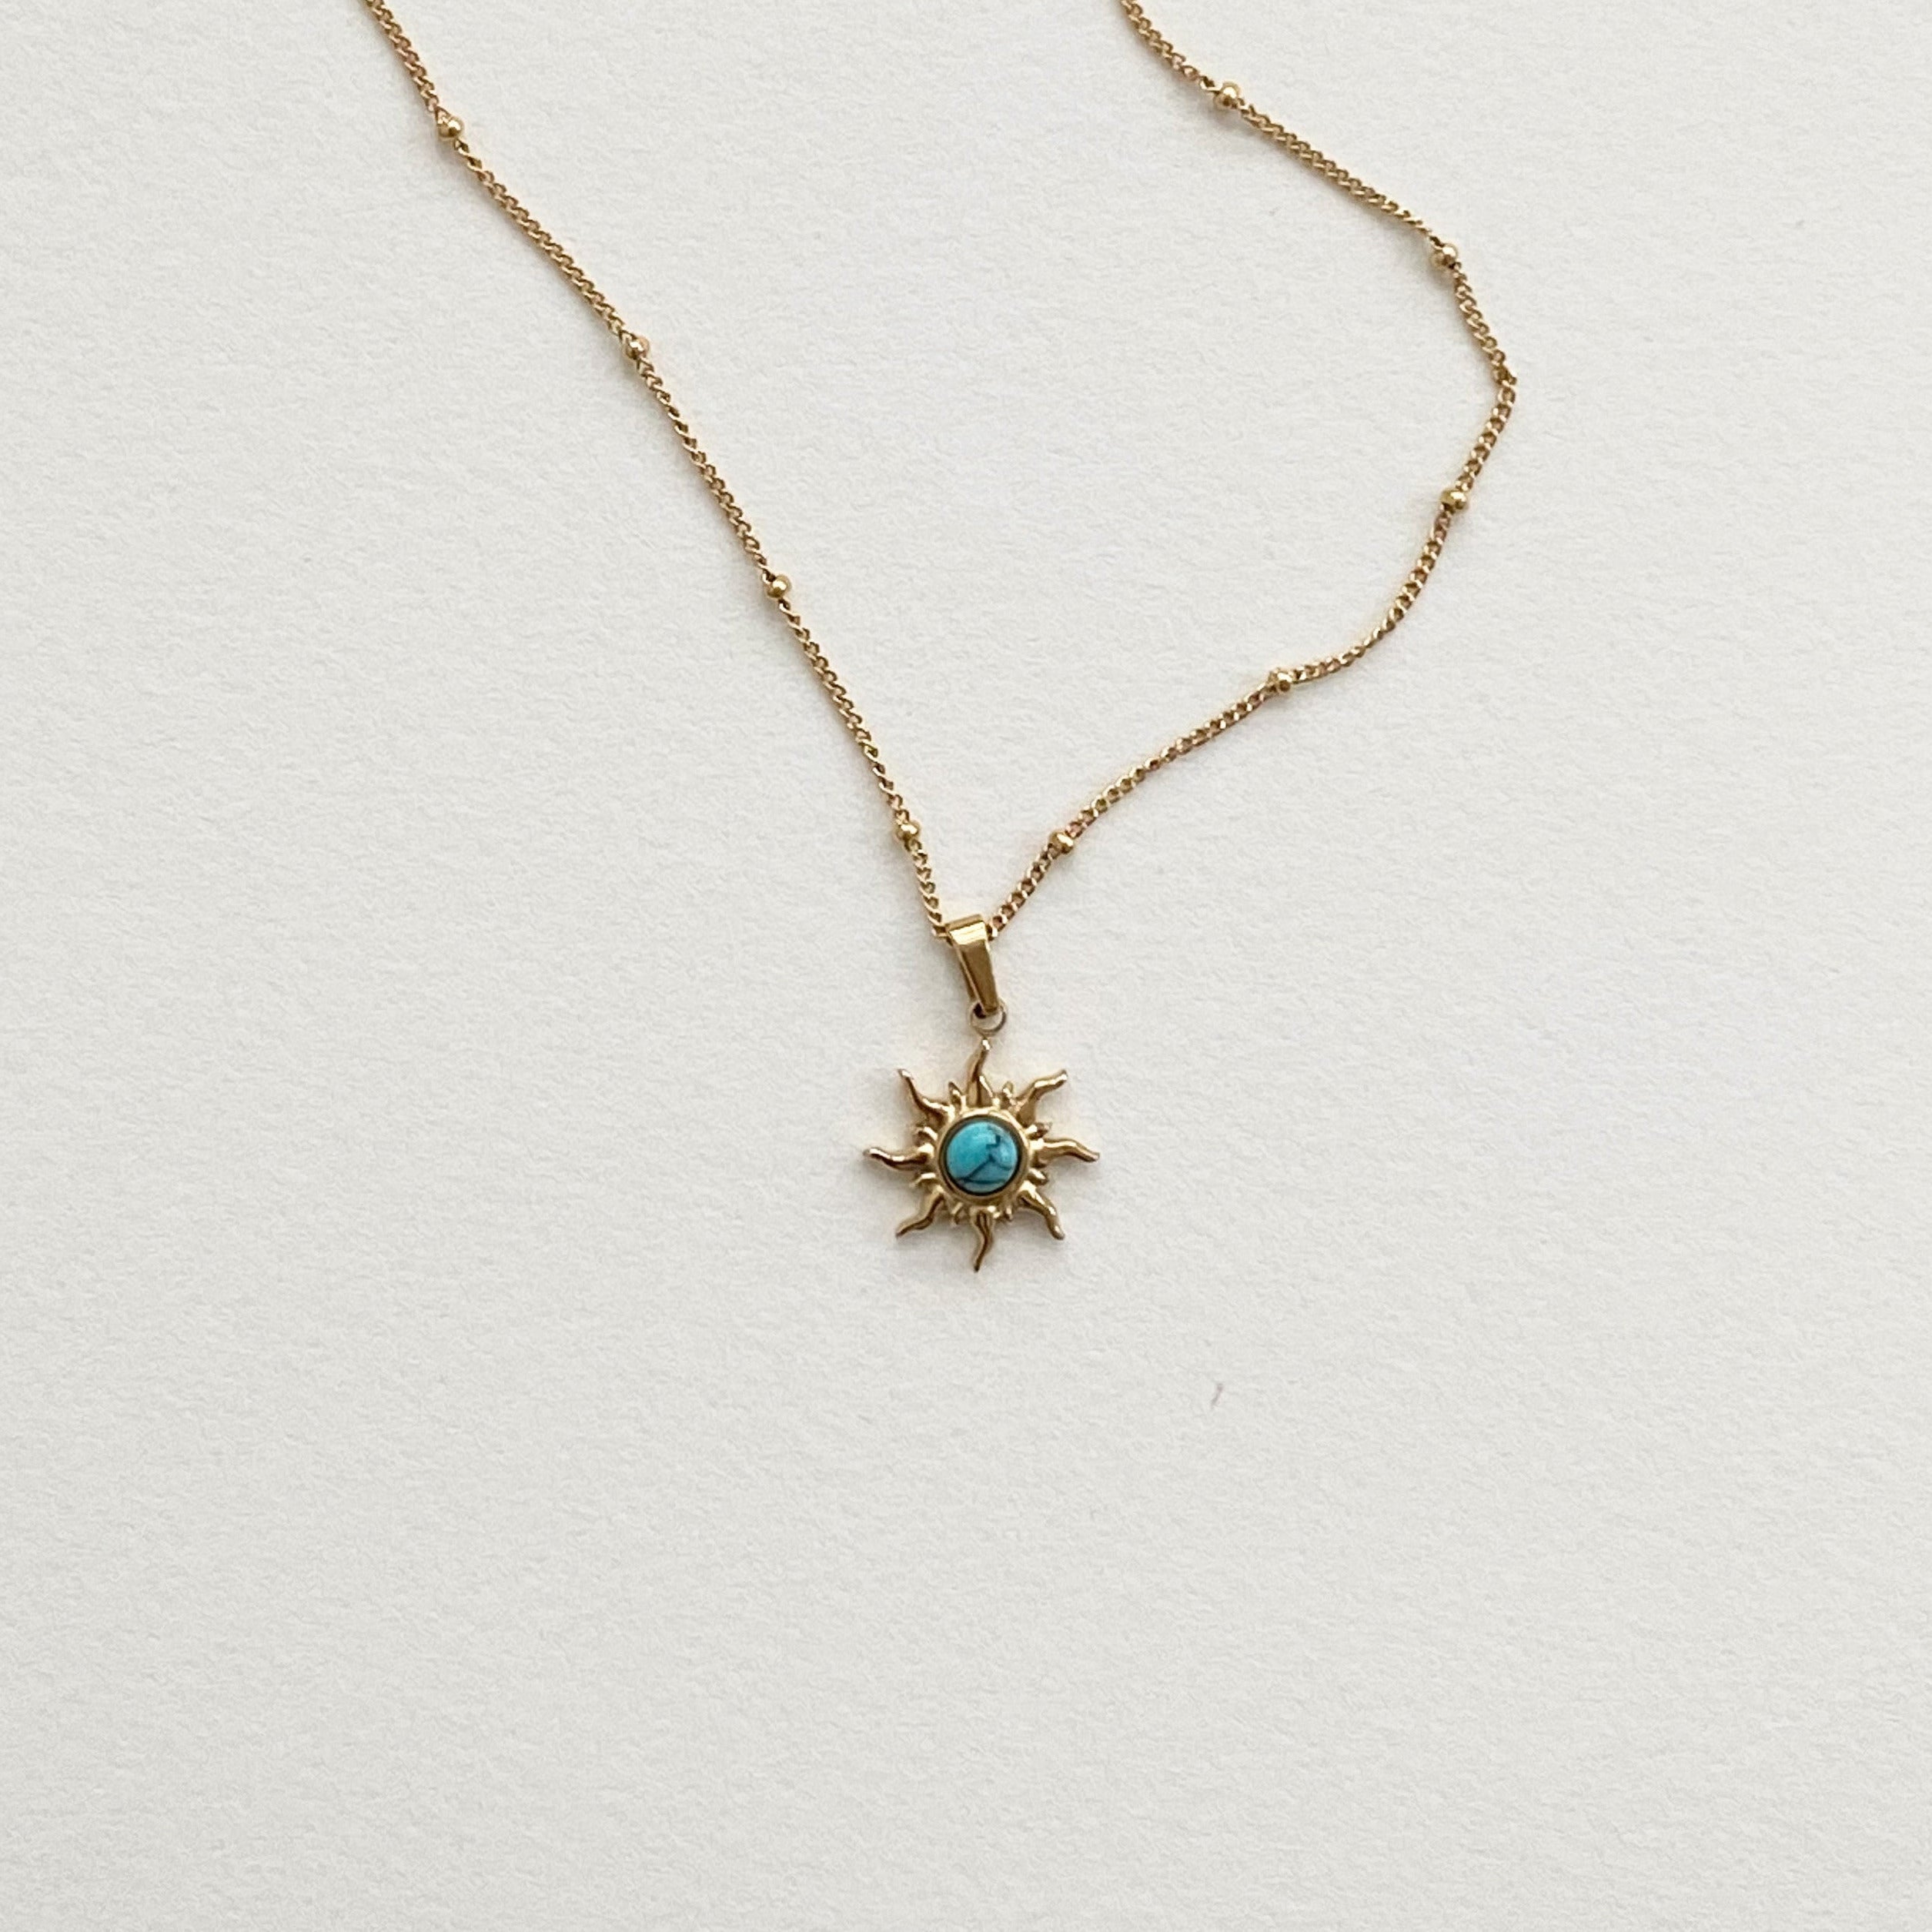 Meideya jewelry turquosie sun pendant necklace